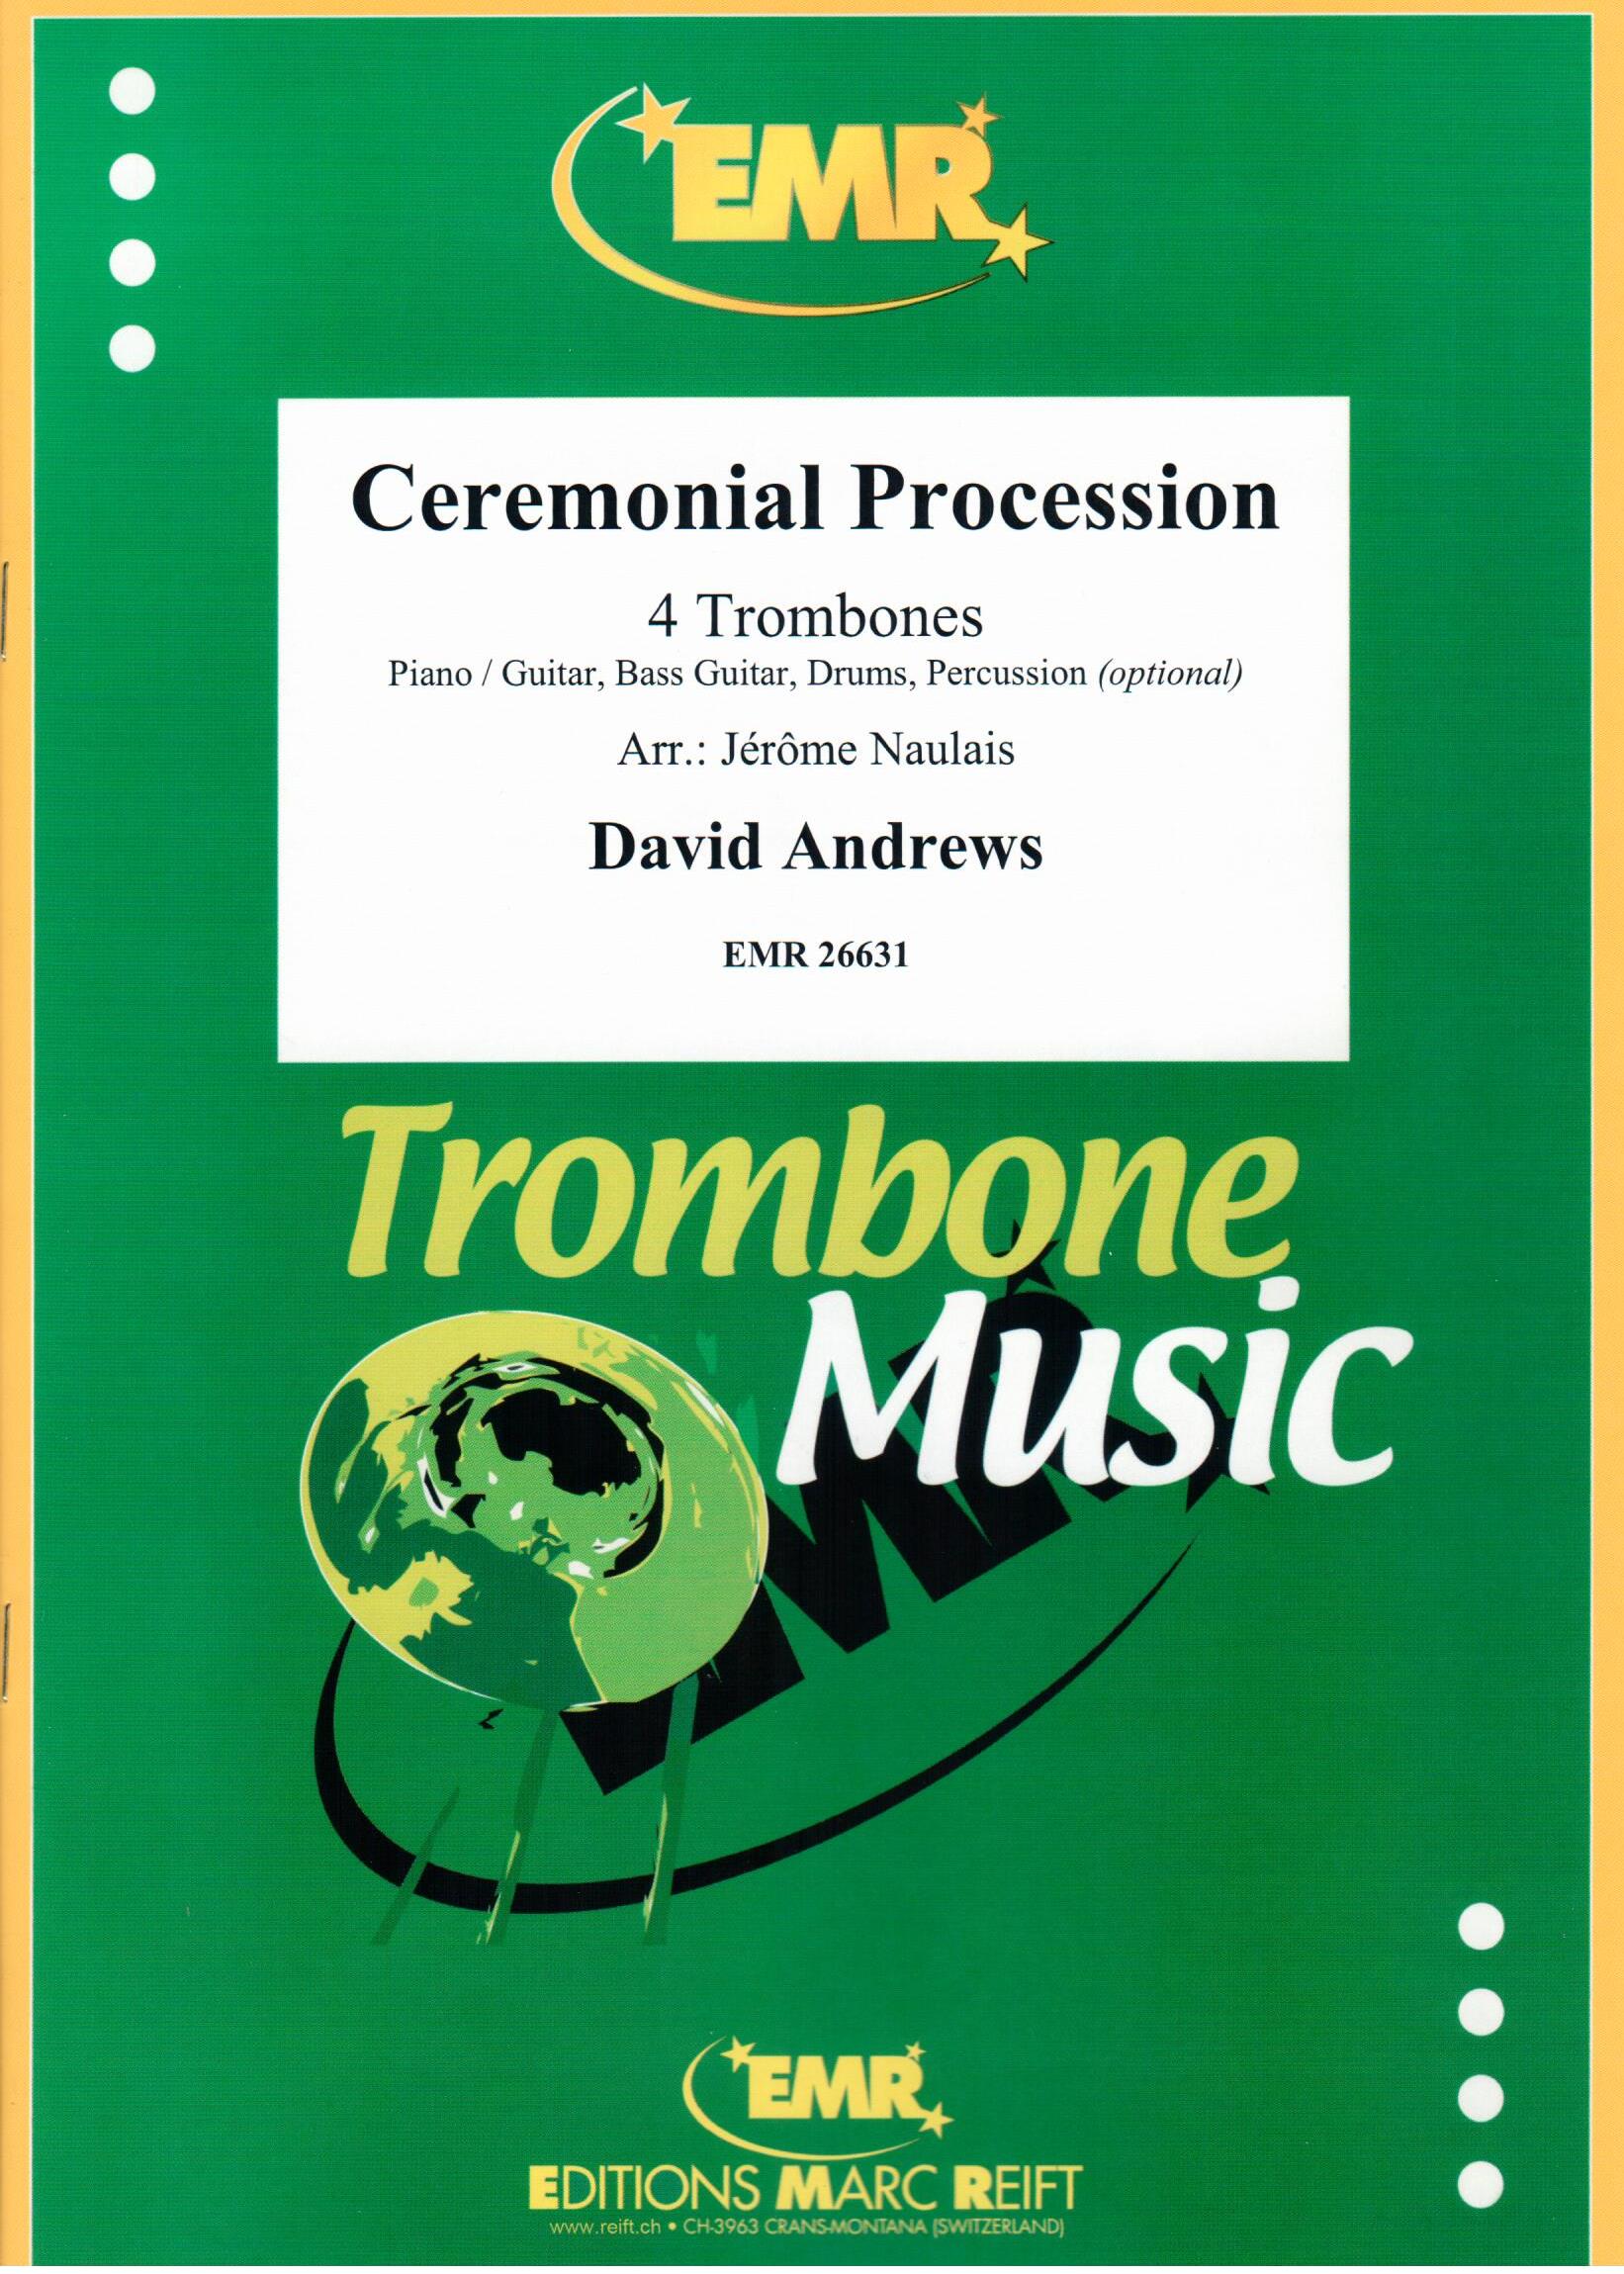 CEREMONIAL PROCESSION, SOLOS - Trombone